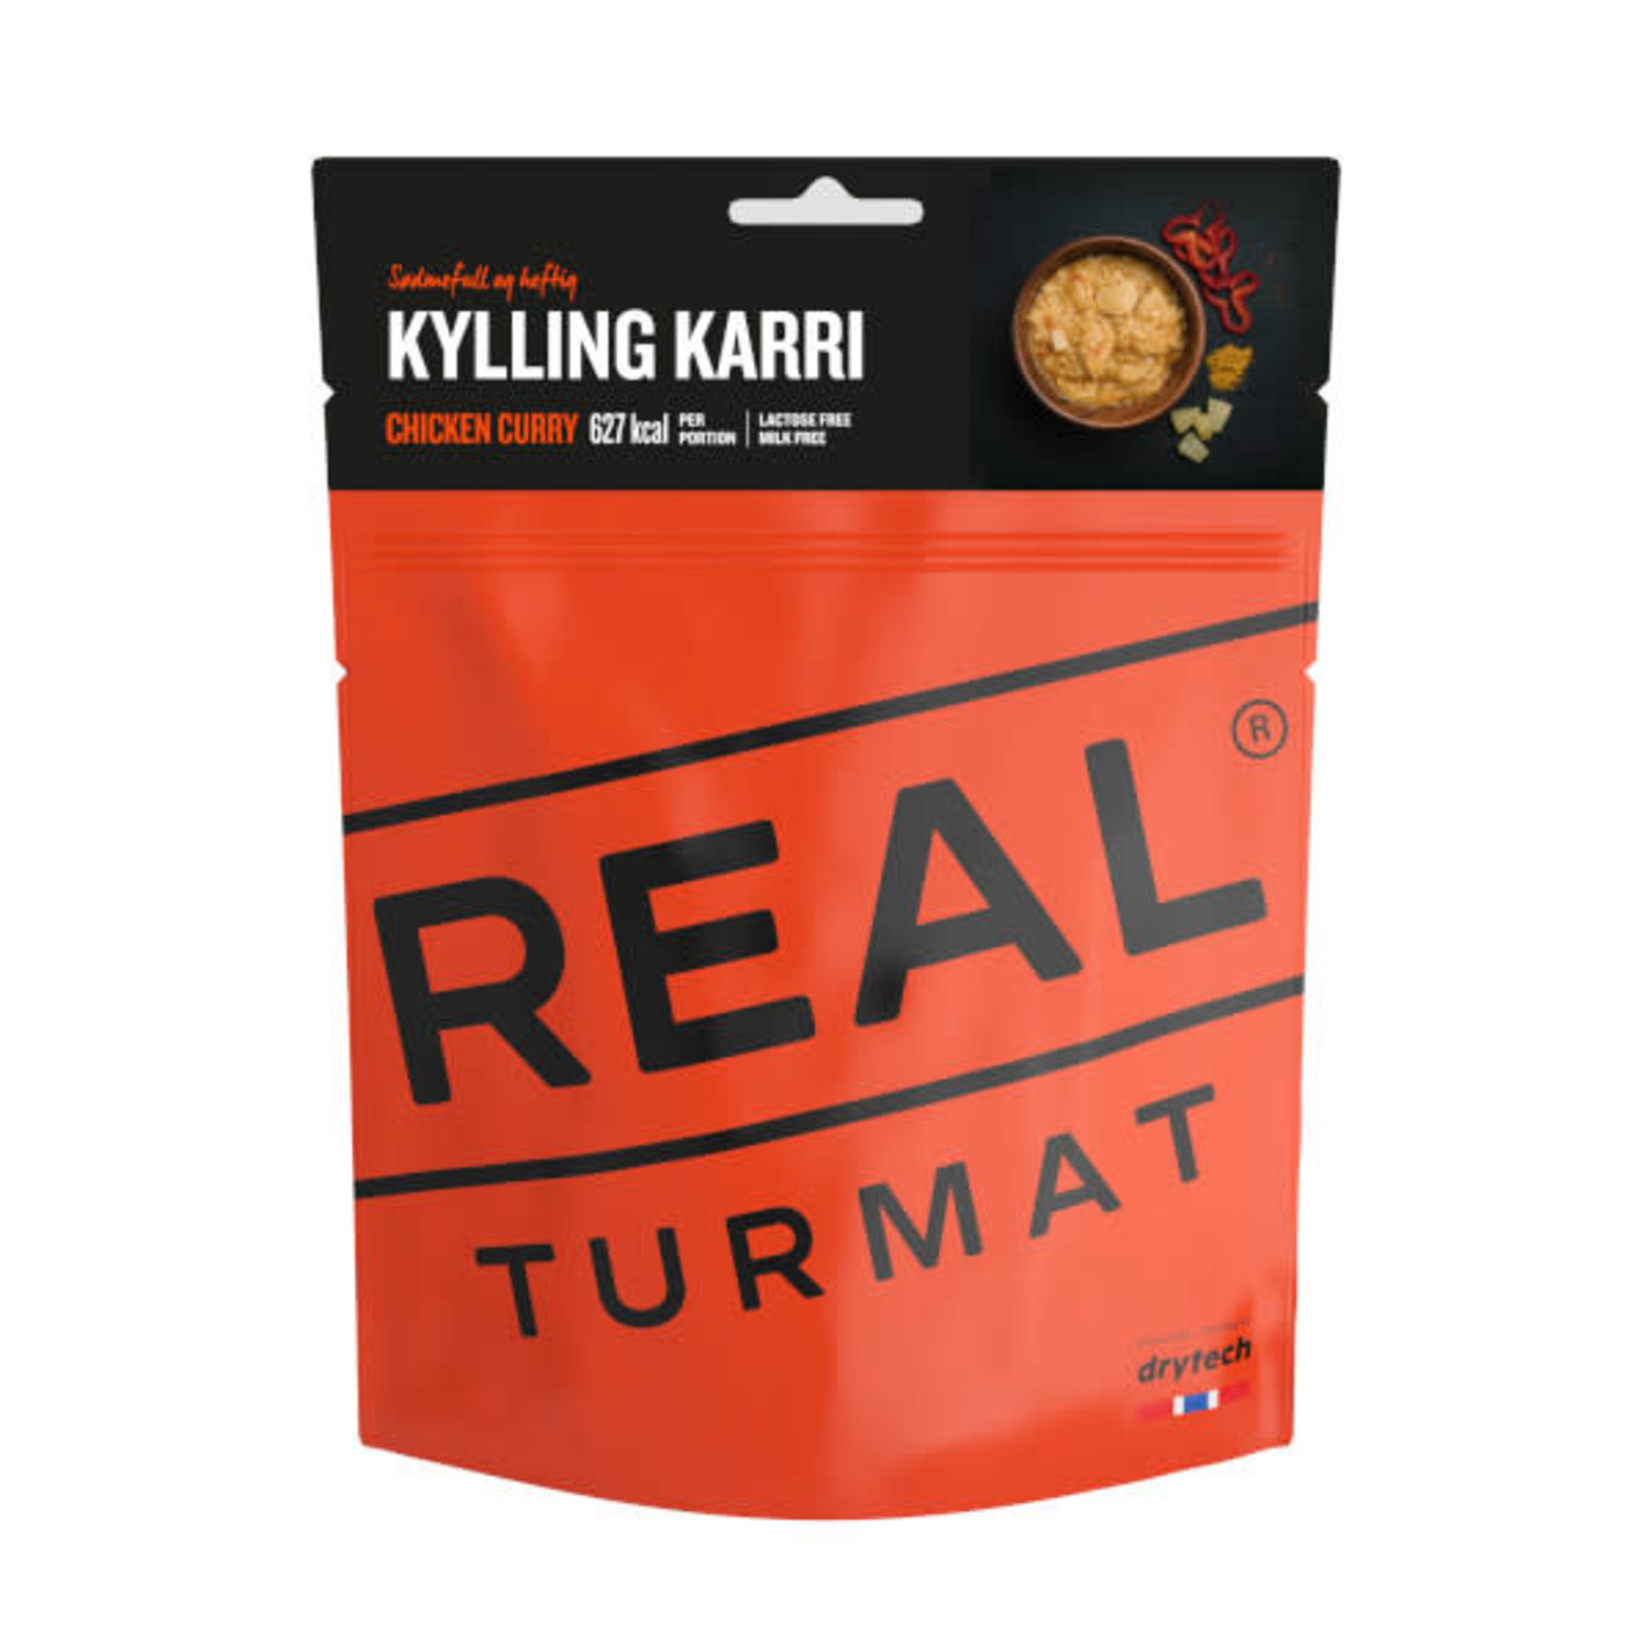 Drytech Real Turmat